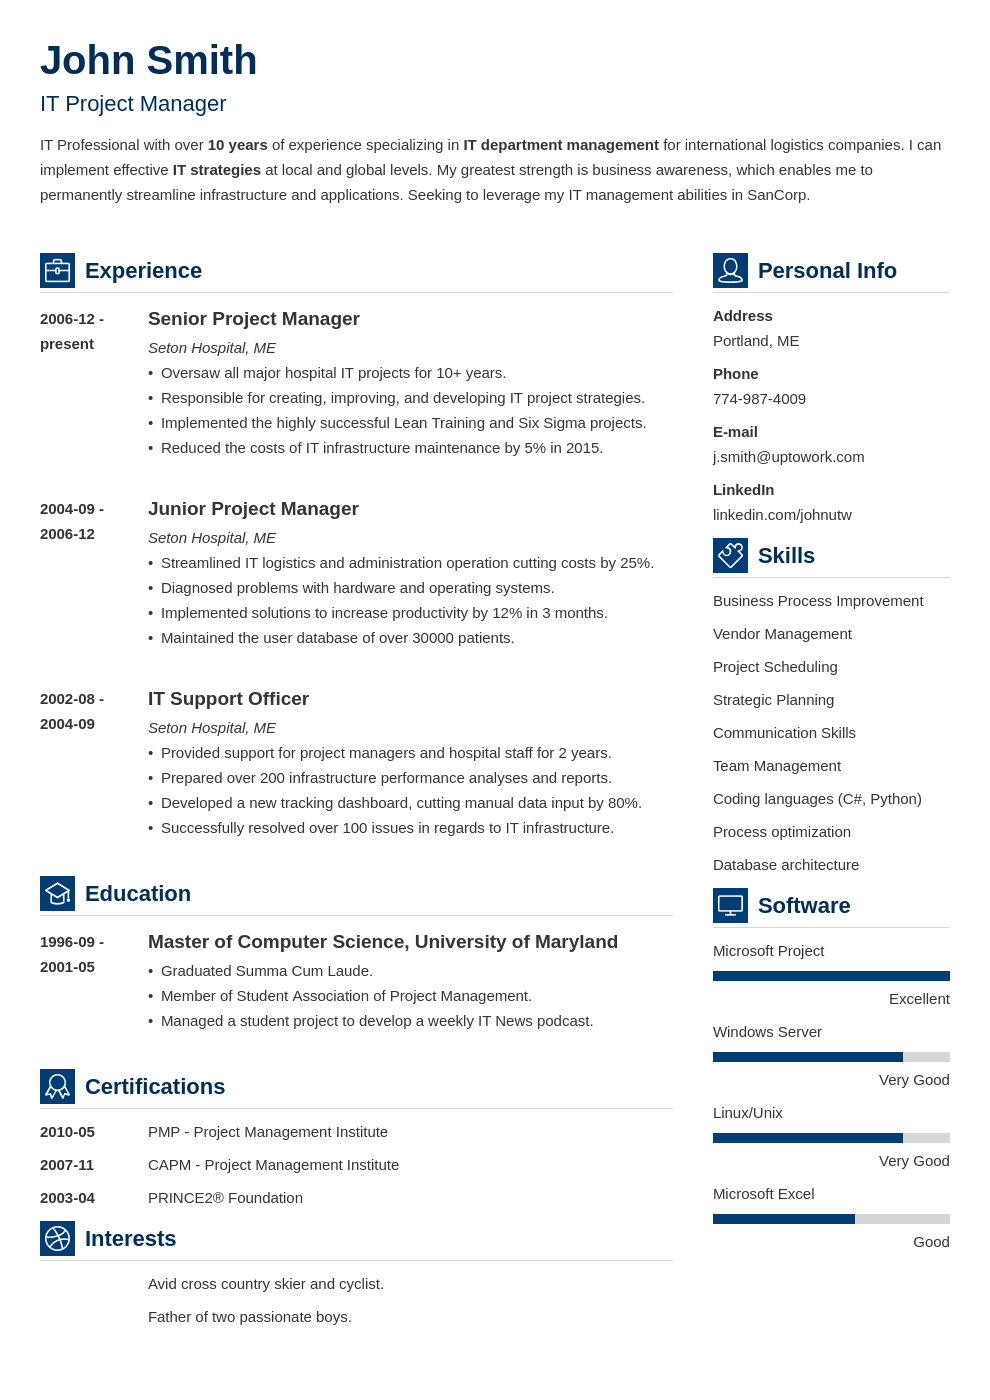 resumehelp.com resume builder